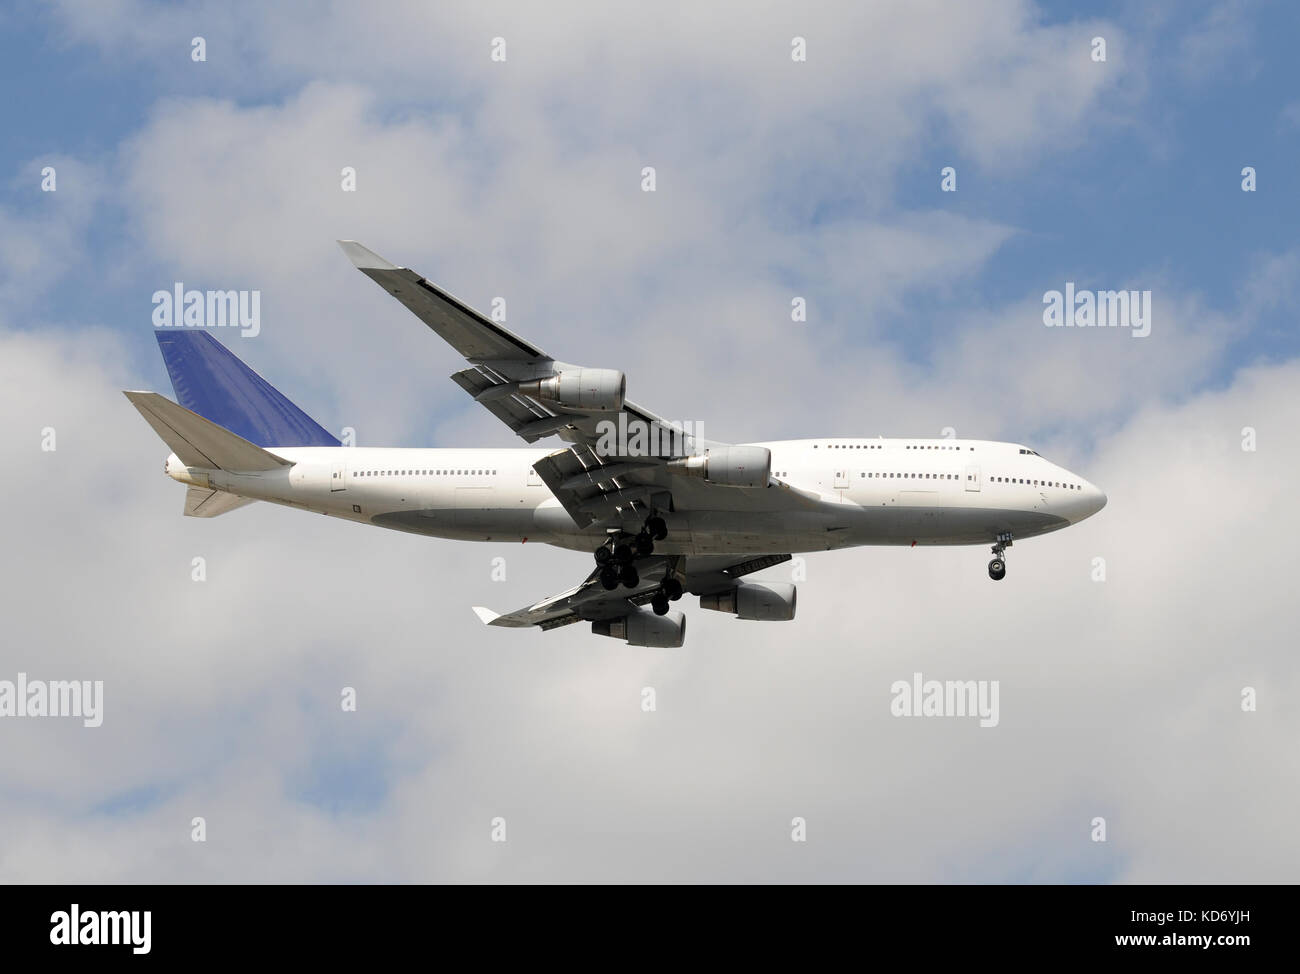 Widebody passenger jet for intercontinental flights Stock Photo